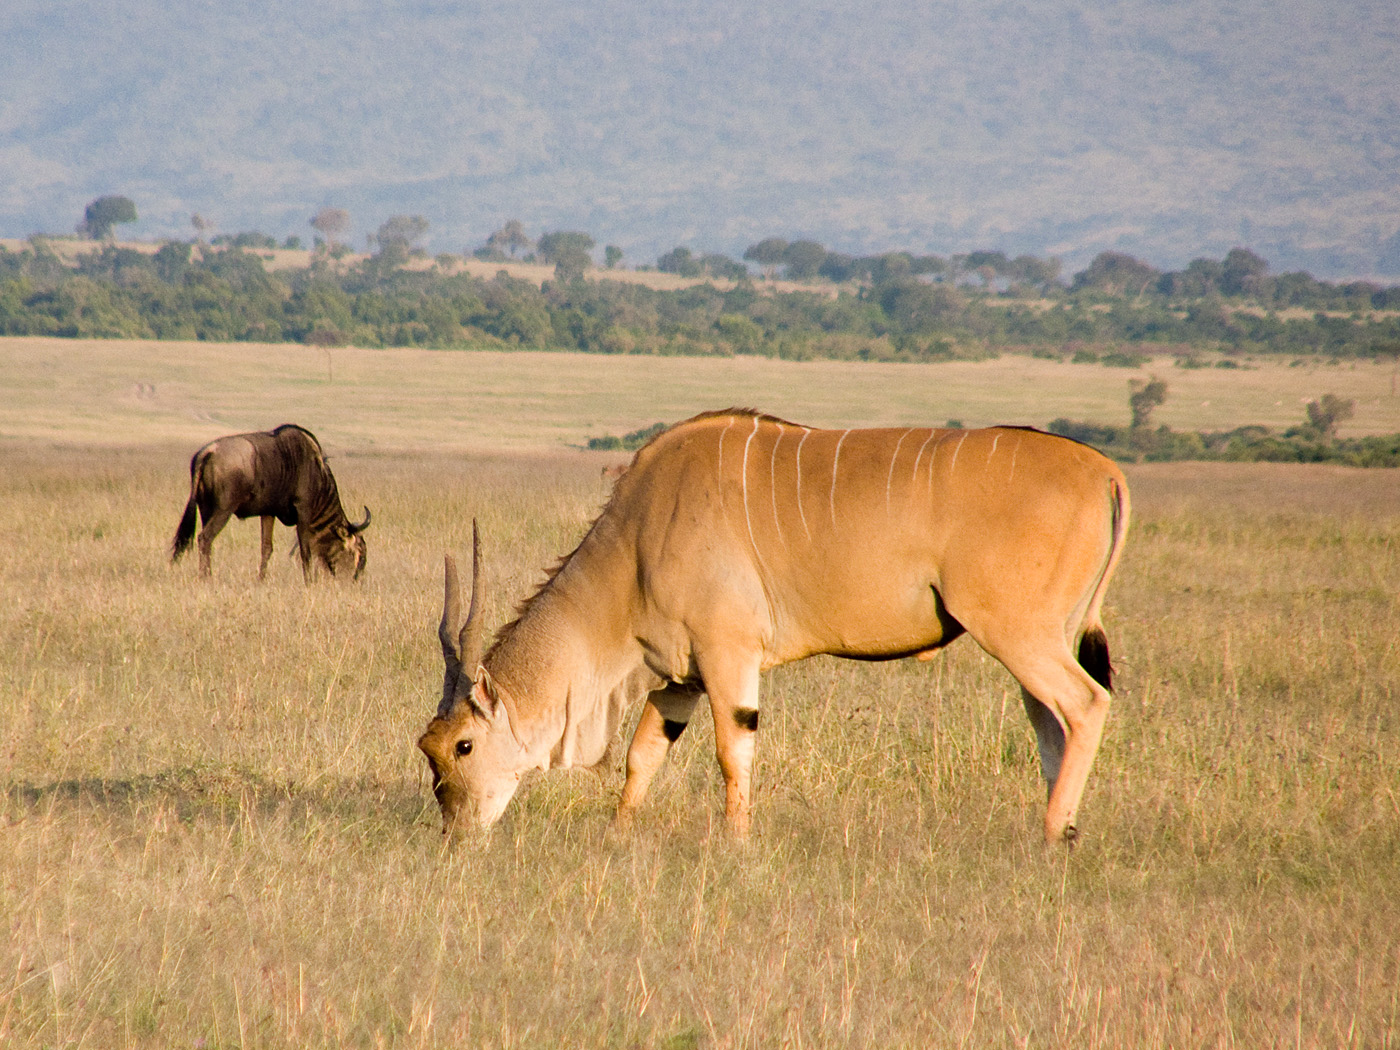 Eland, Mara North Conservancy